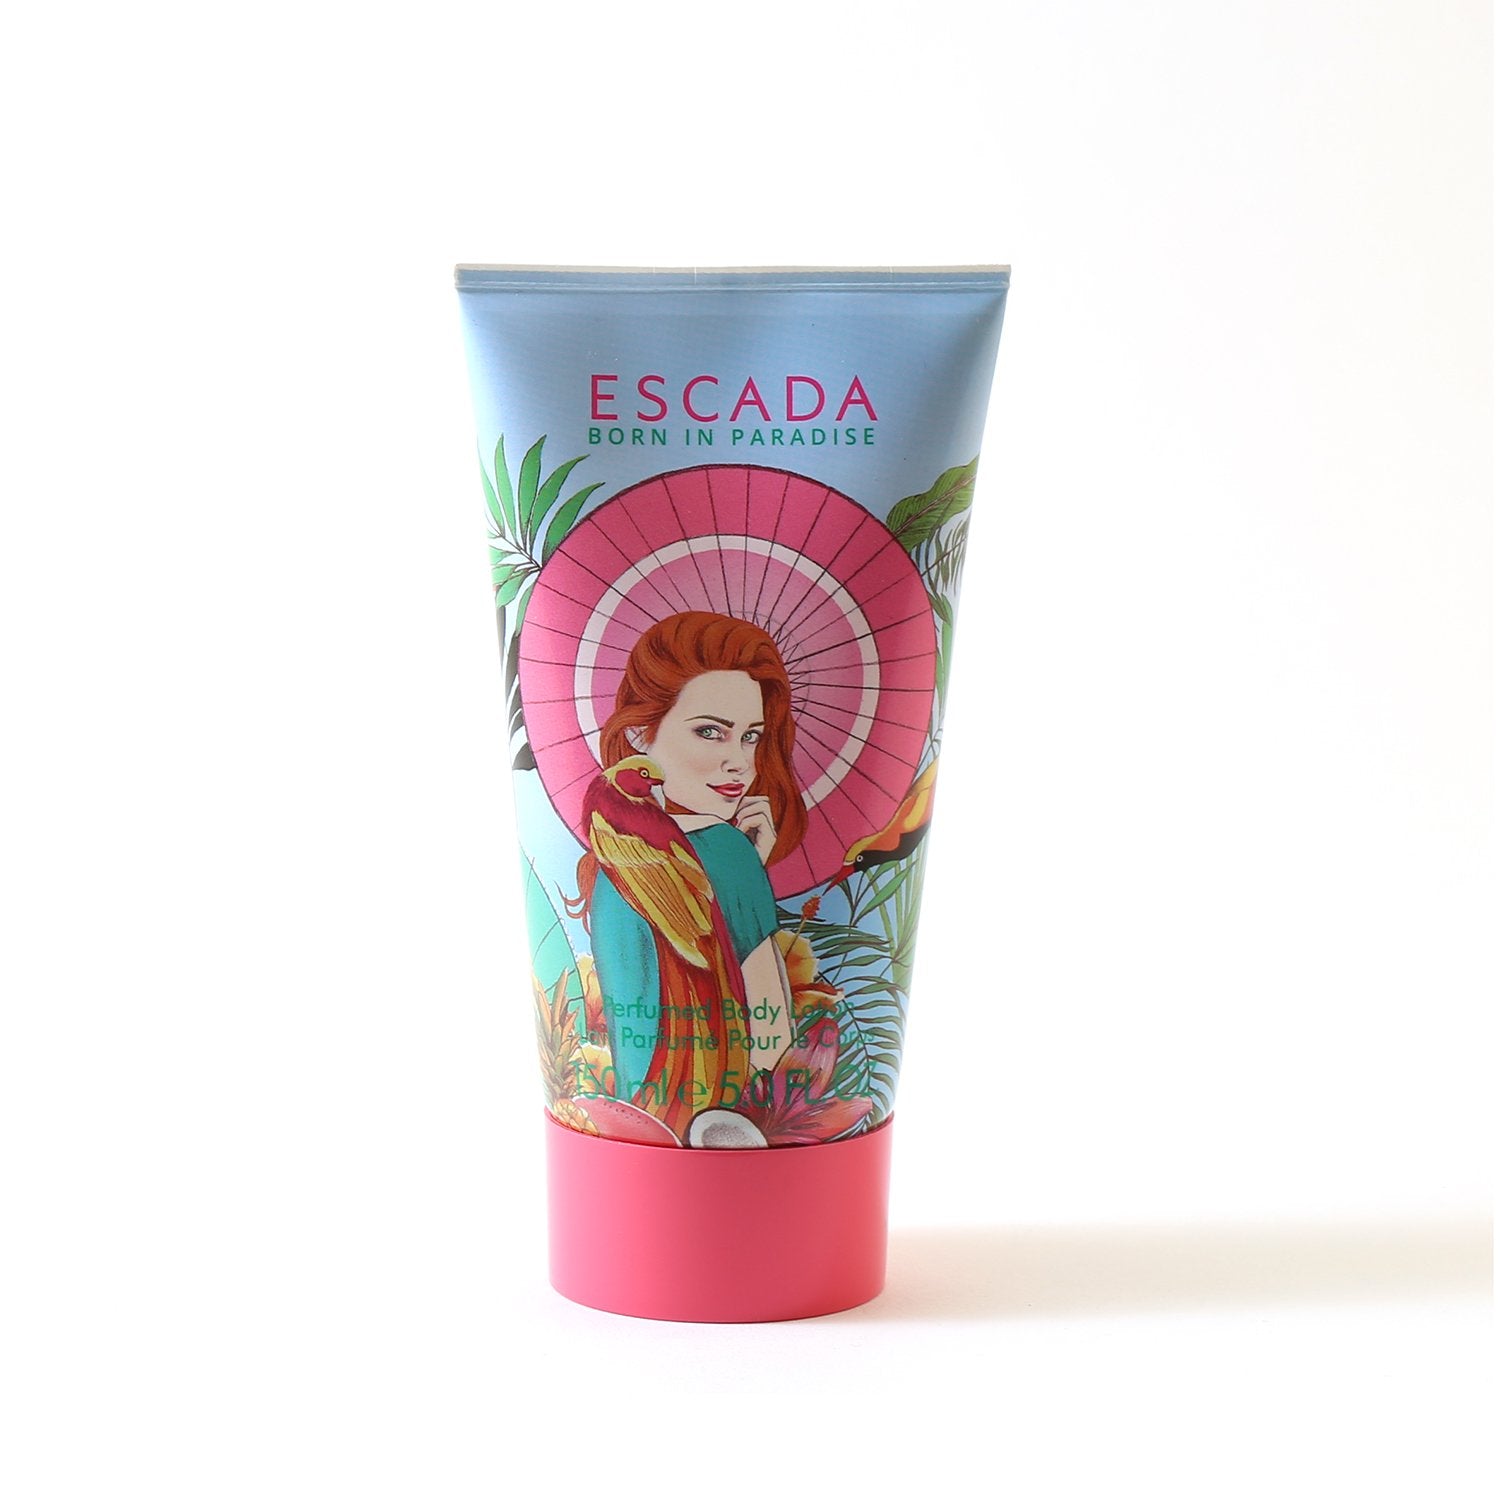 Perfume - ESCADA BORN IN PARADISE FOR WOMEN - BODY LOTION, 5.0 OZ.